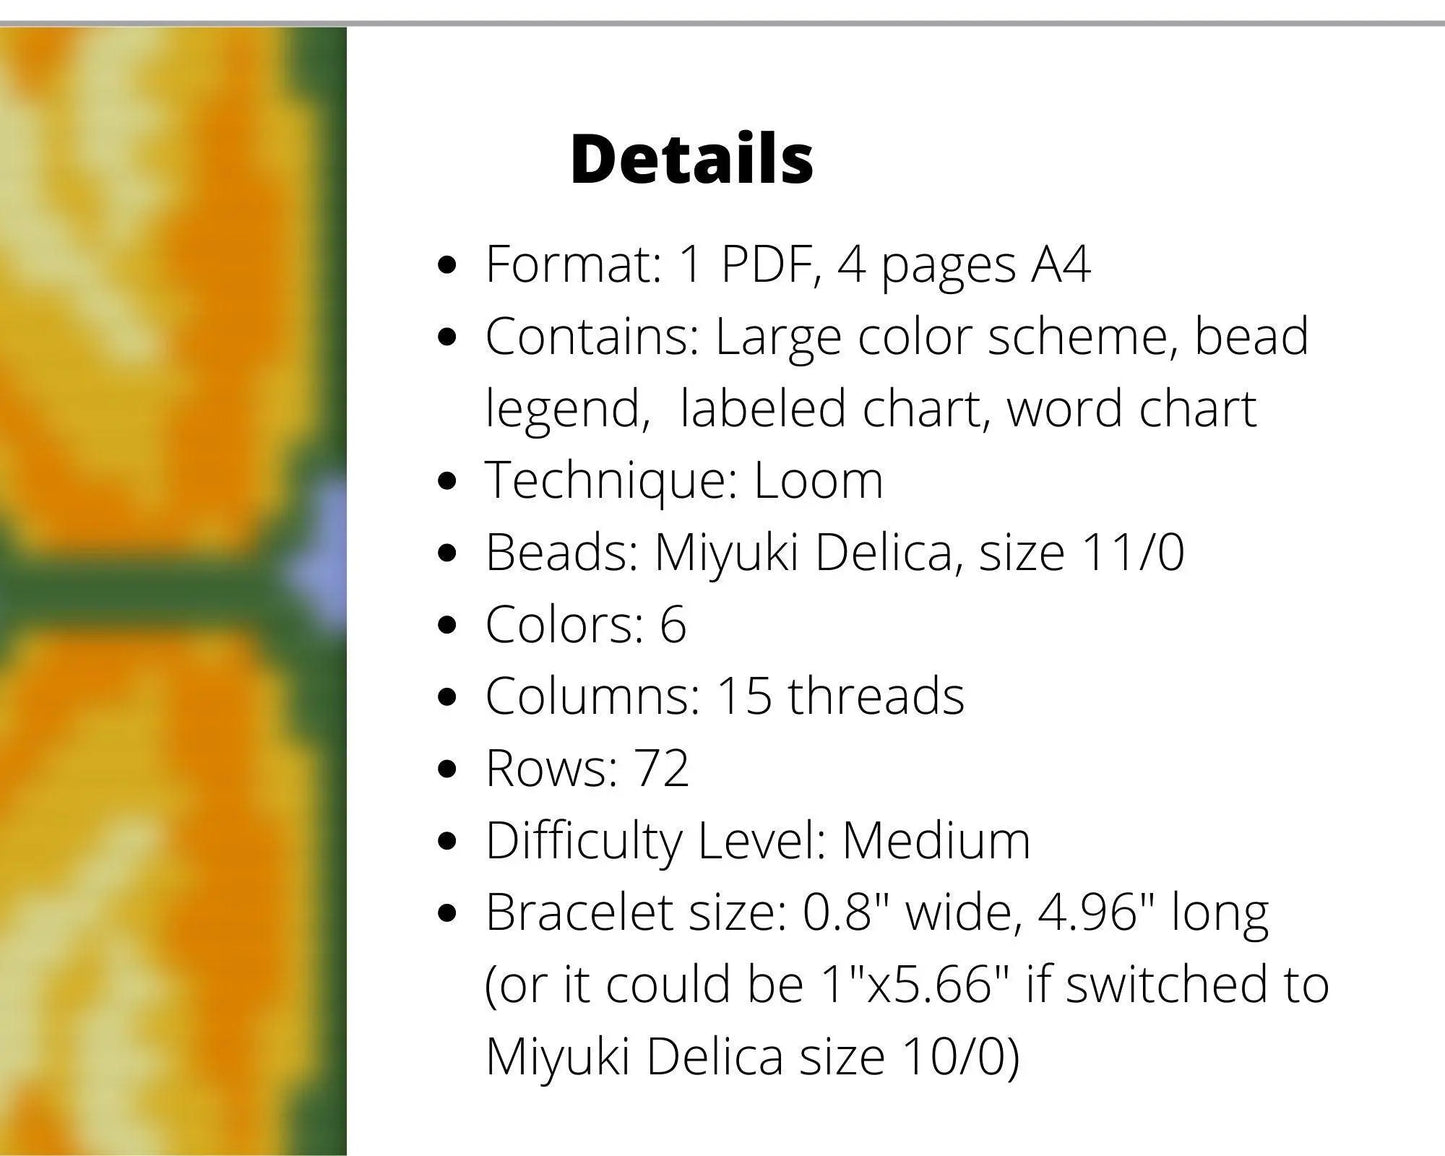 Yellow Tulips Loom pattern for beaded bracelet - NikoBeadsUA